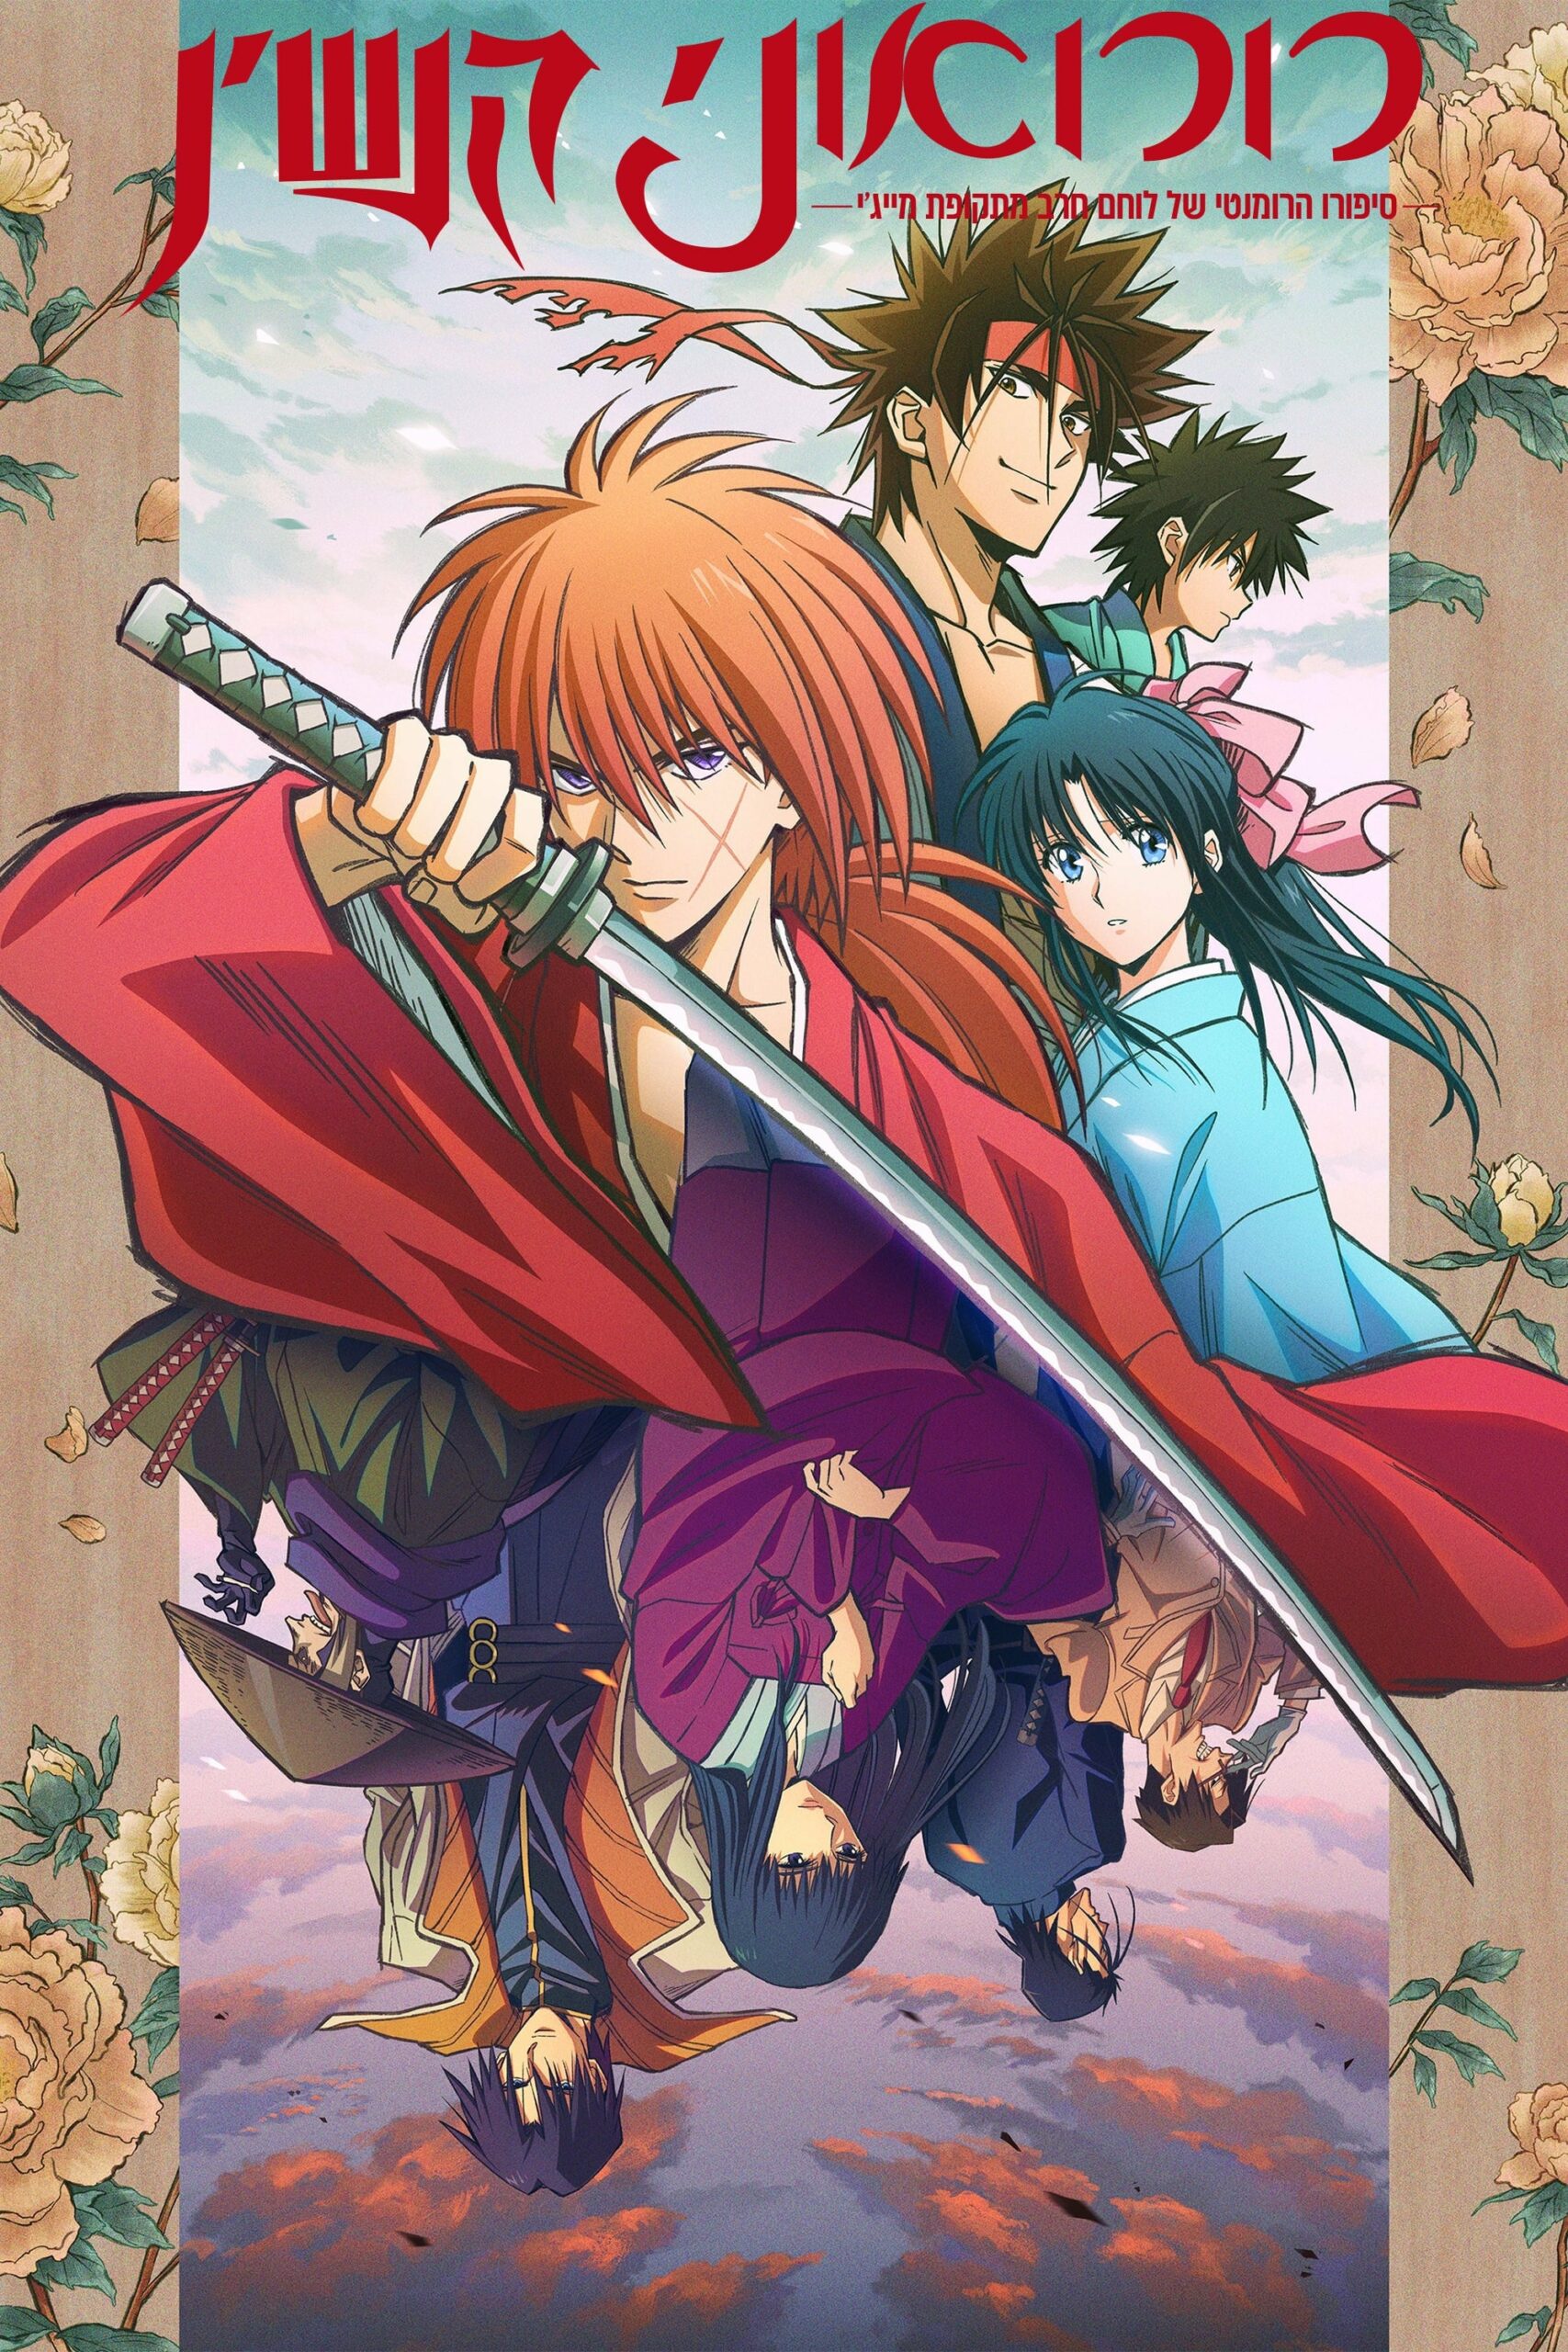 Assistir Rurouni Kenshin: Meiji Kenkaku Romantan Online completo